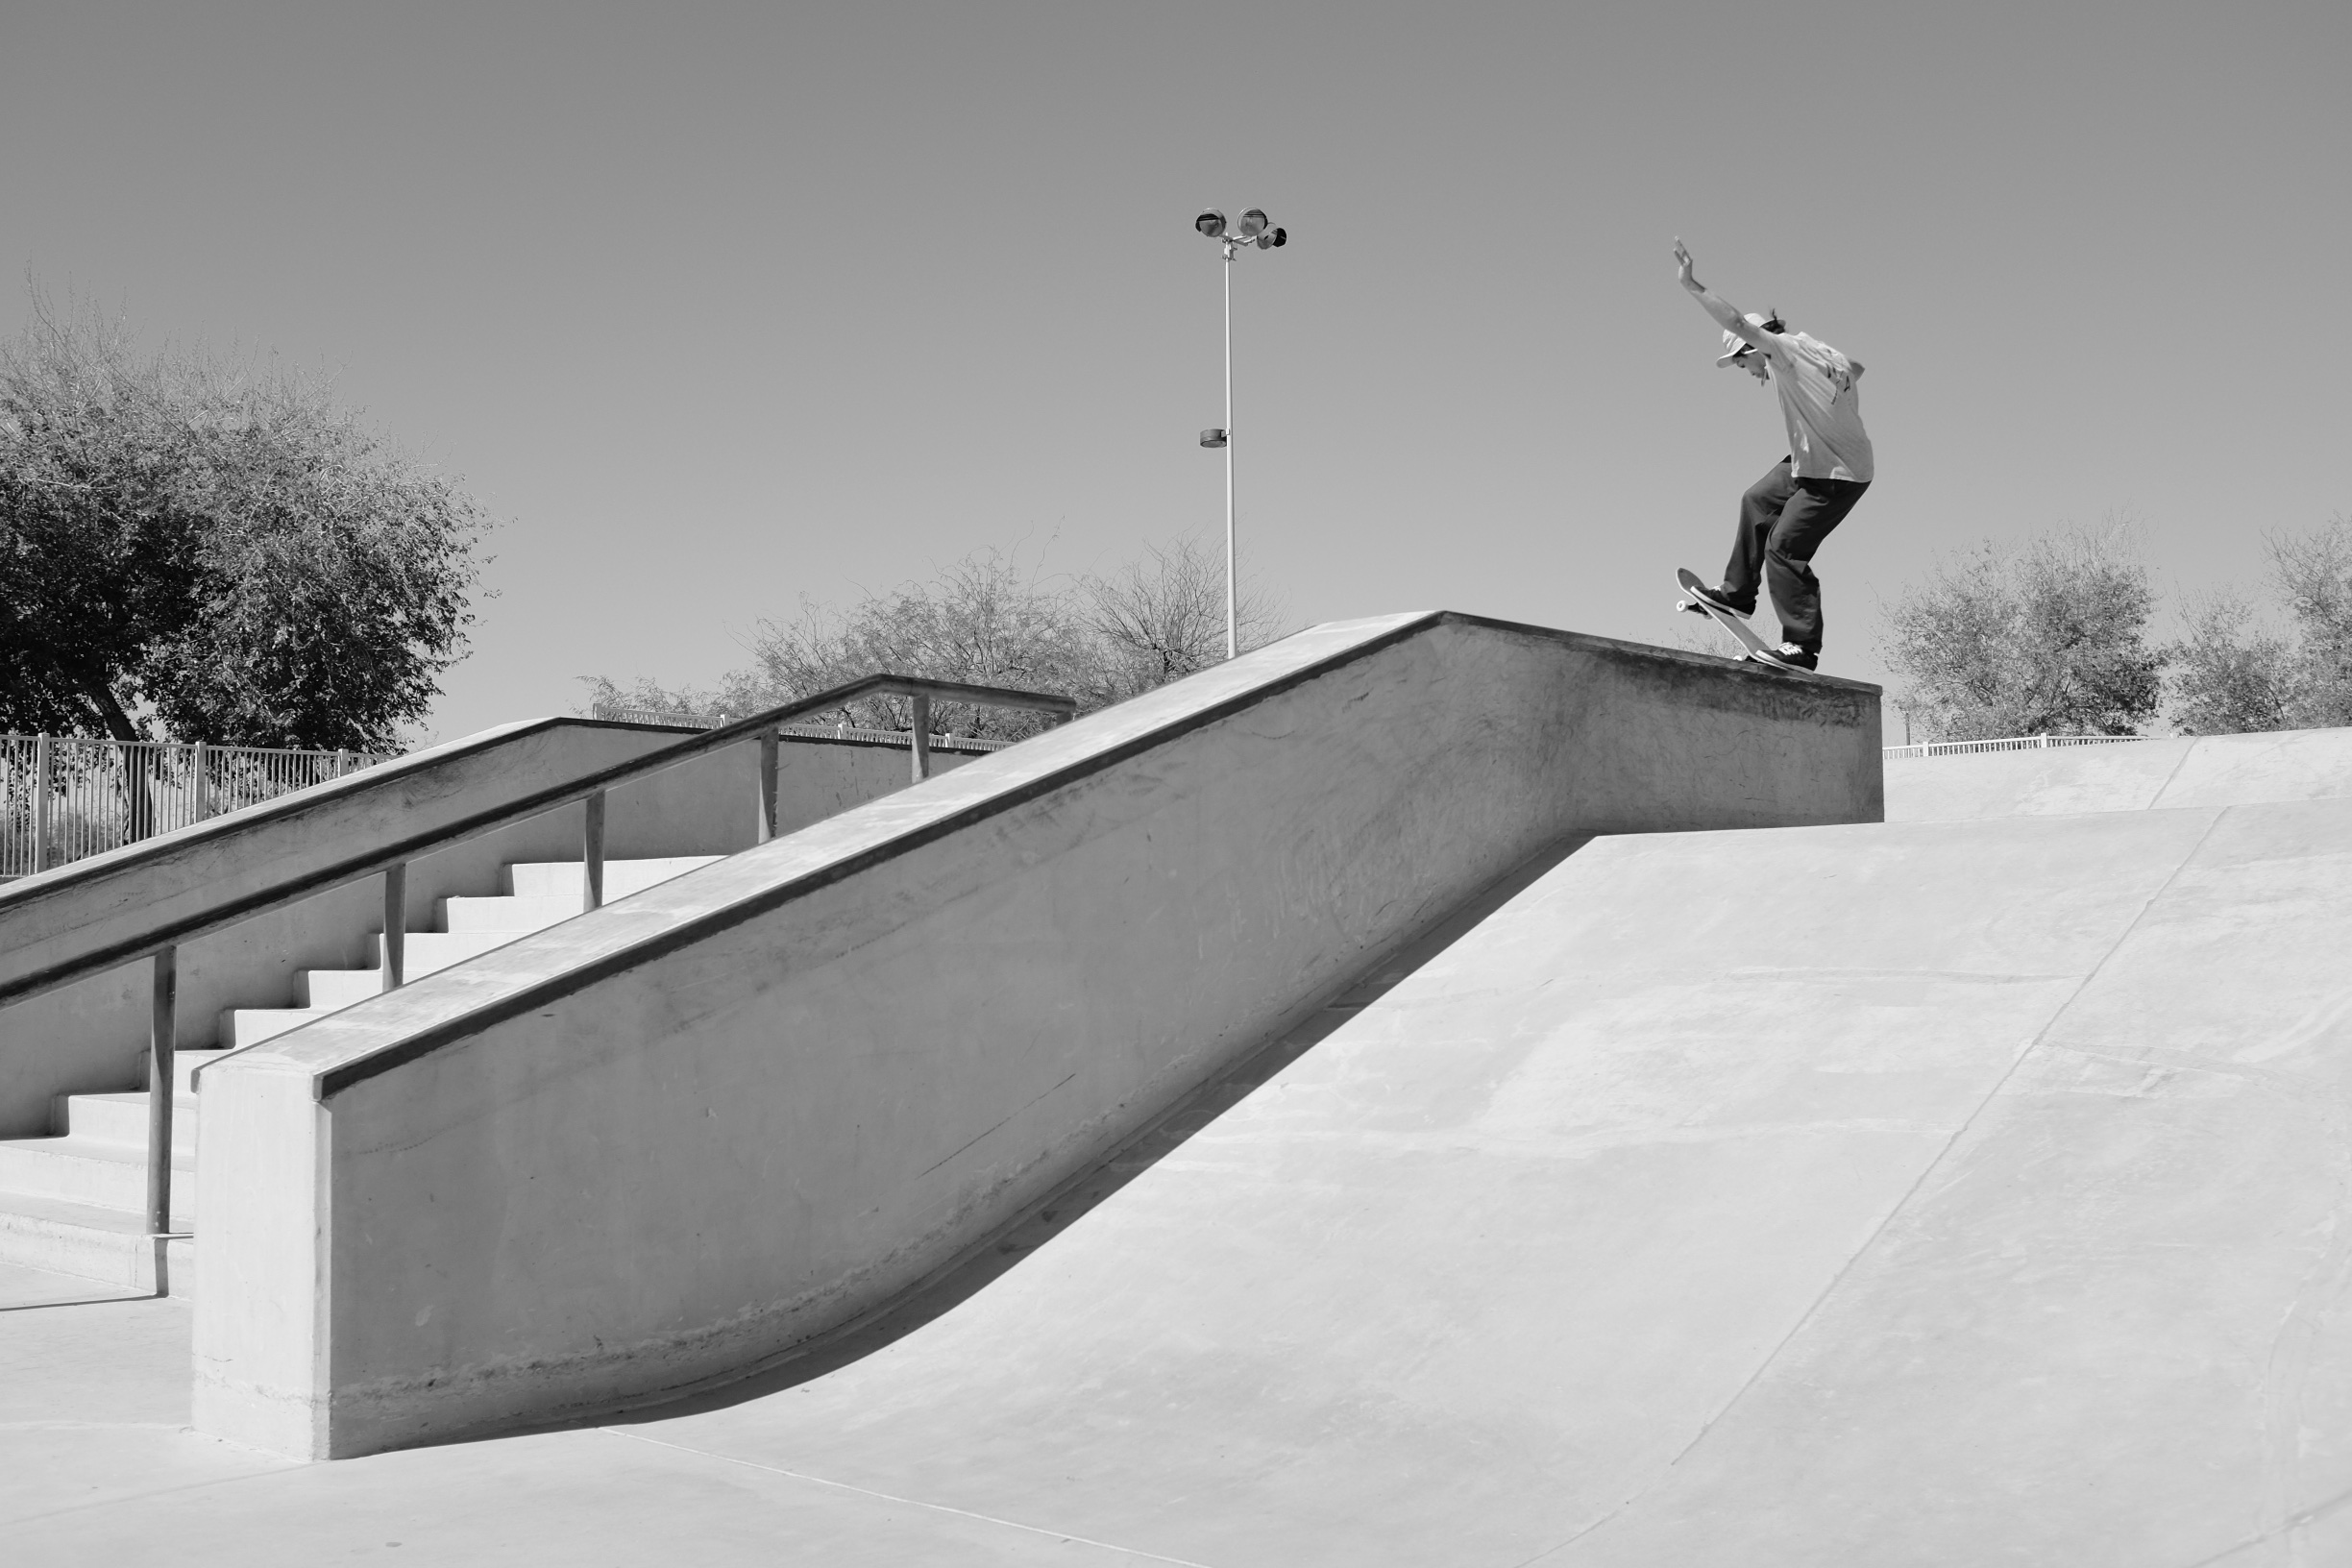 Billy Browne skateboard